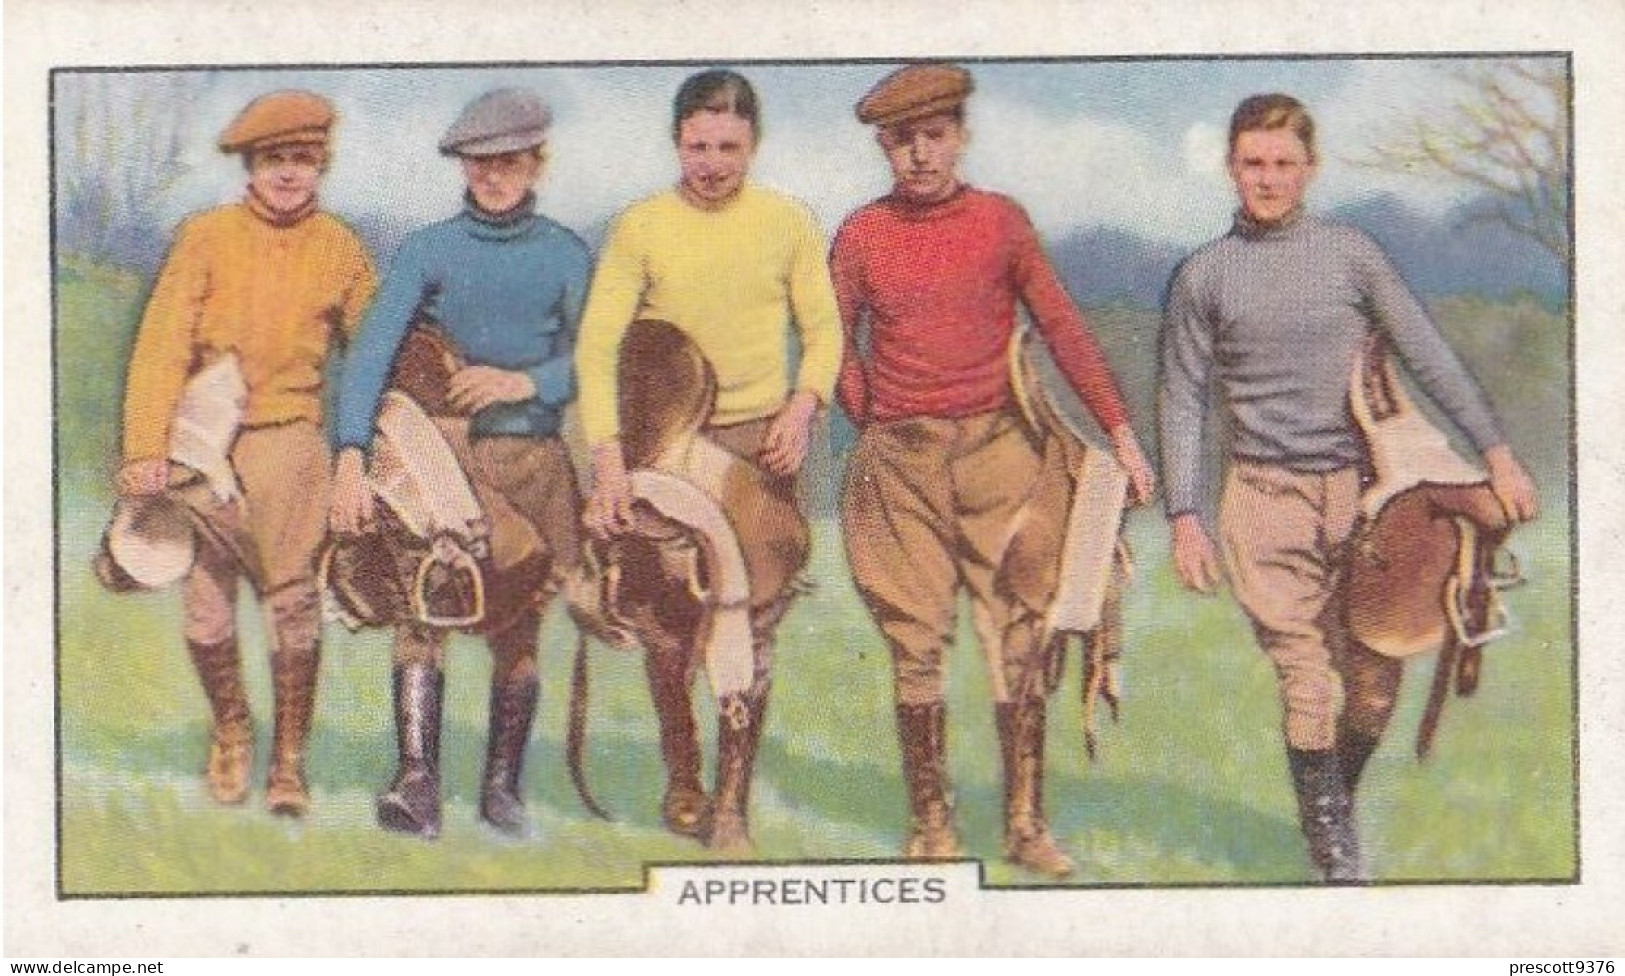 Racing Scenes 1938 - Gallaher Cigarette Card - 16 Apprentices - Gallaher